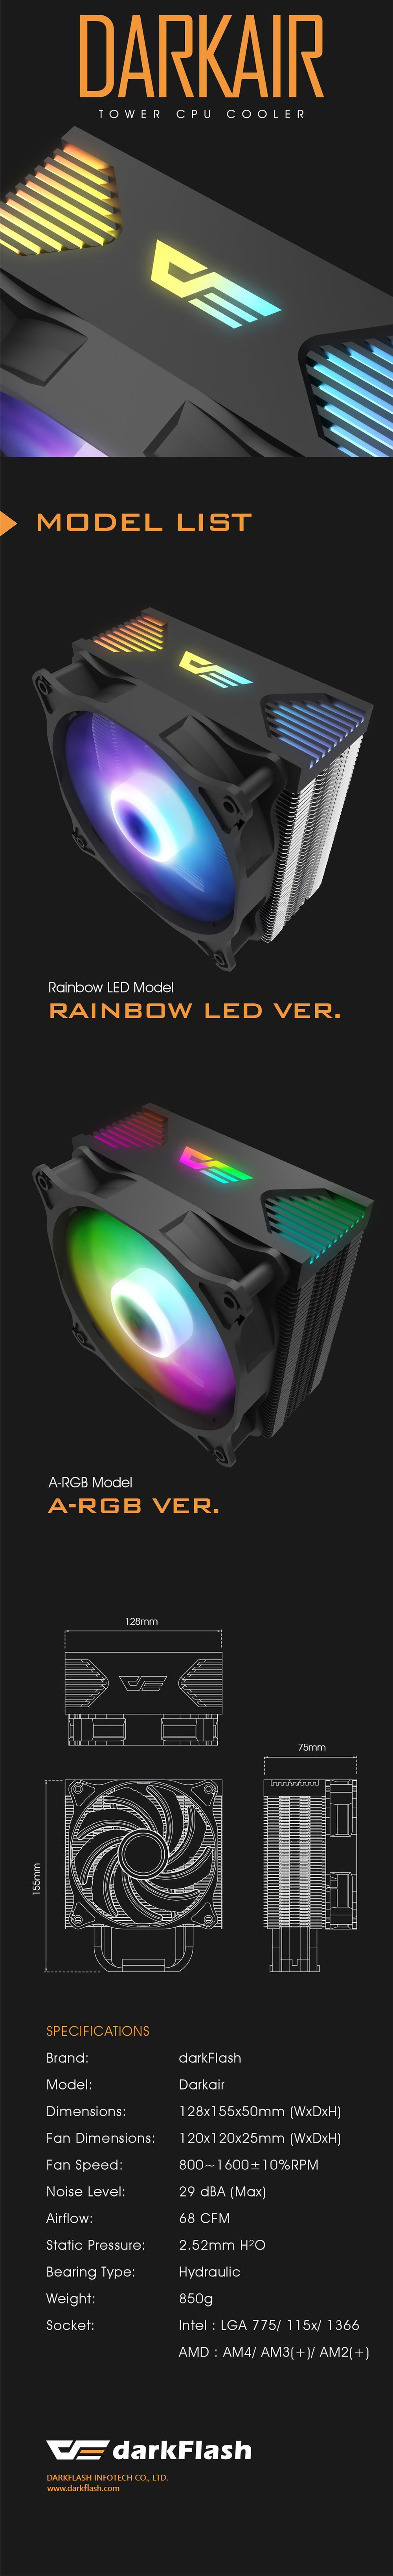 DarkFlash-Darkair-CPU-Cooler-4-Heat-Pipes-Heatsink-with-120mm-Rainbow-LED-Fan-4Pin-Computer-RGB-CPU--1682381